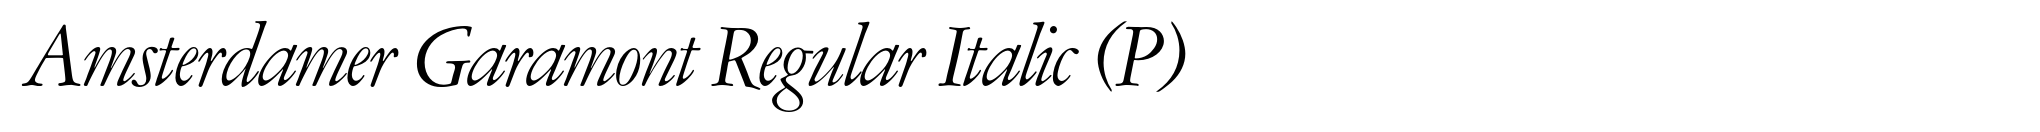 Amsterdamer Garamont Regular Italic (P) image